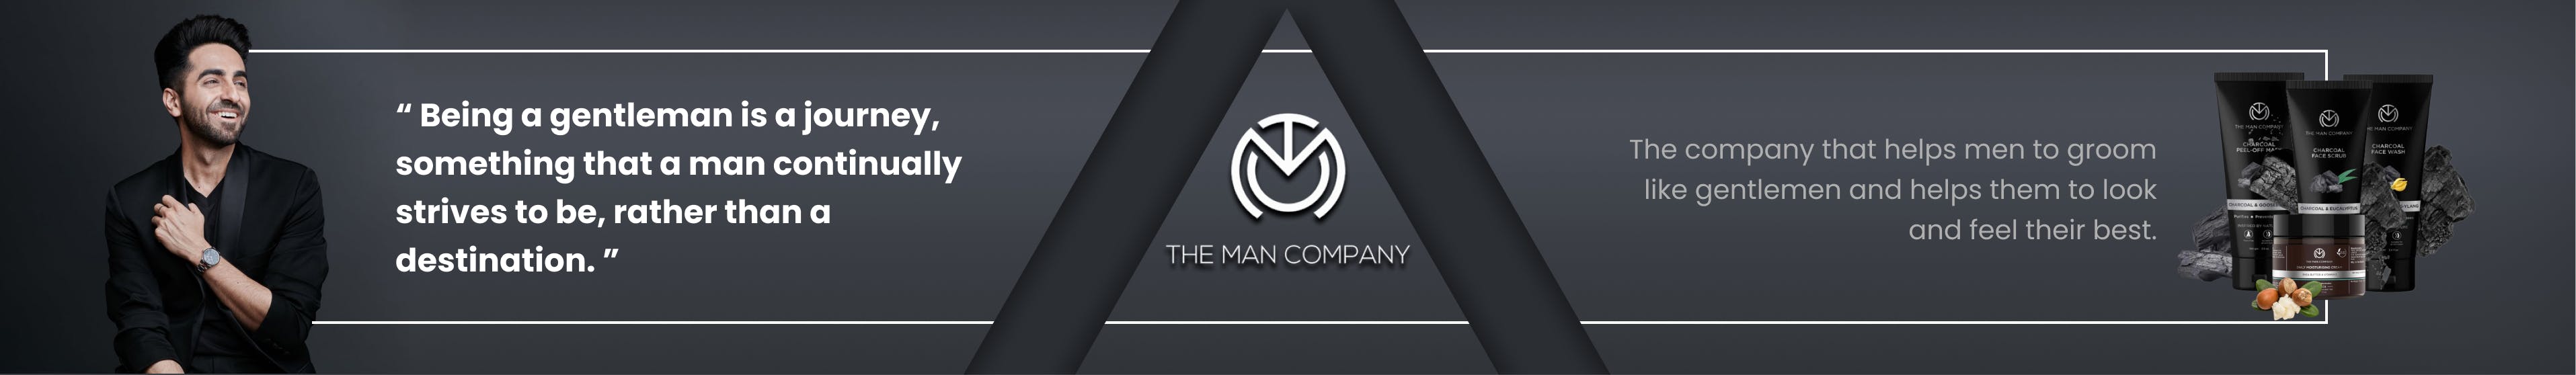 the-man-company-1.jpg